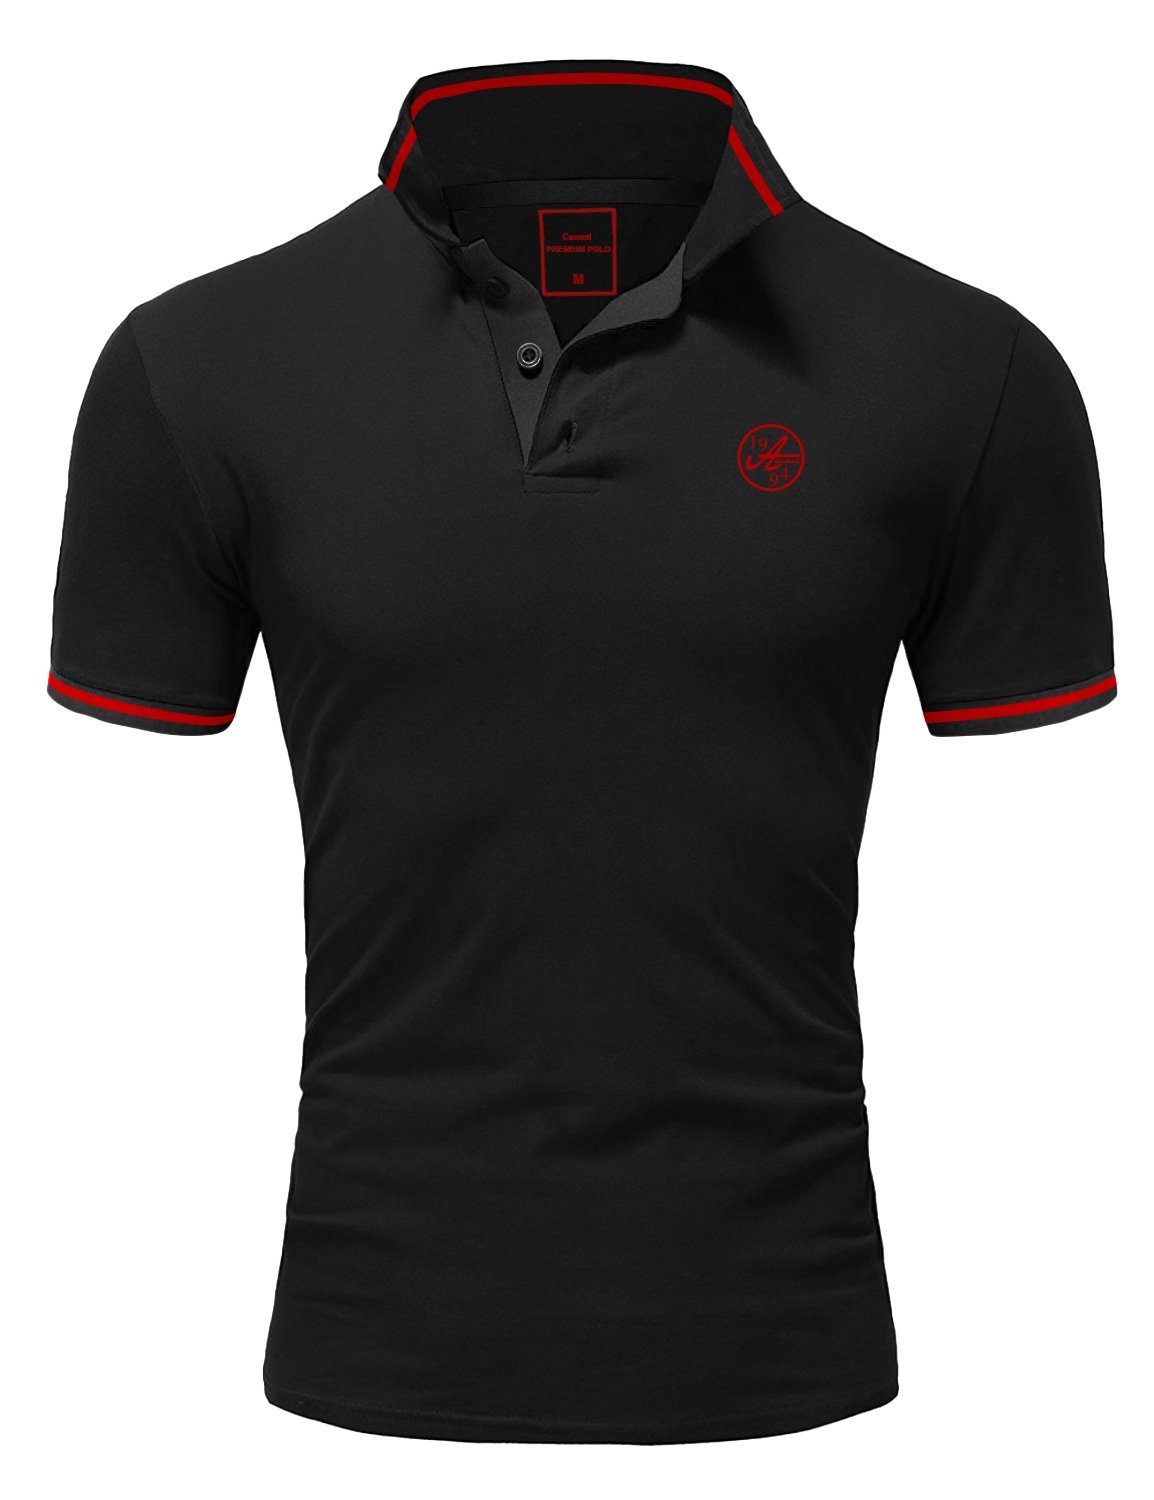 Stickerei MACON Poloshirt Herren Schwarz/Rot Polohemd Kurzarm Basic Amaci&Sons T-Shirt Kontrast